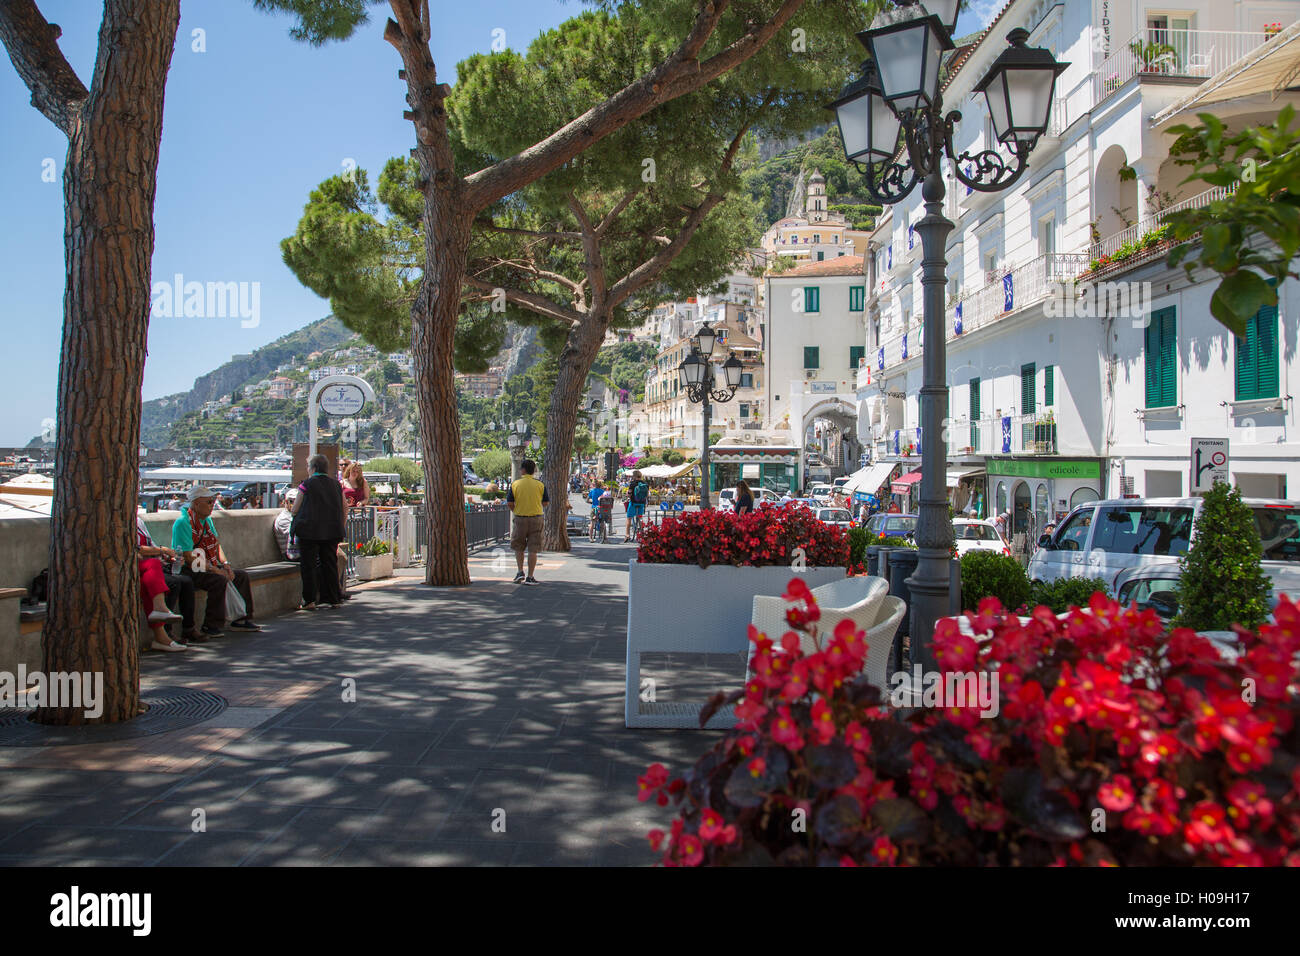 Promenade, Amalfi, Costiera Amalfitana (Amalfi Coast), UNESCO World Heritage Site, Campania, Italy, Europe Stock Photo